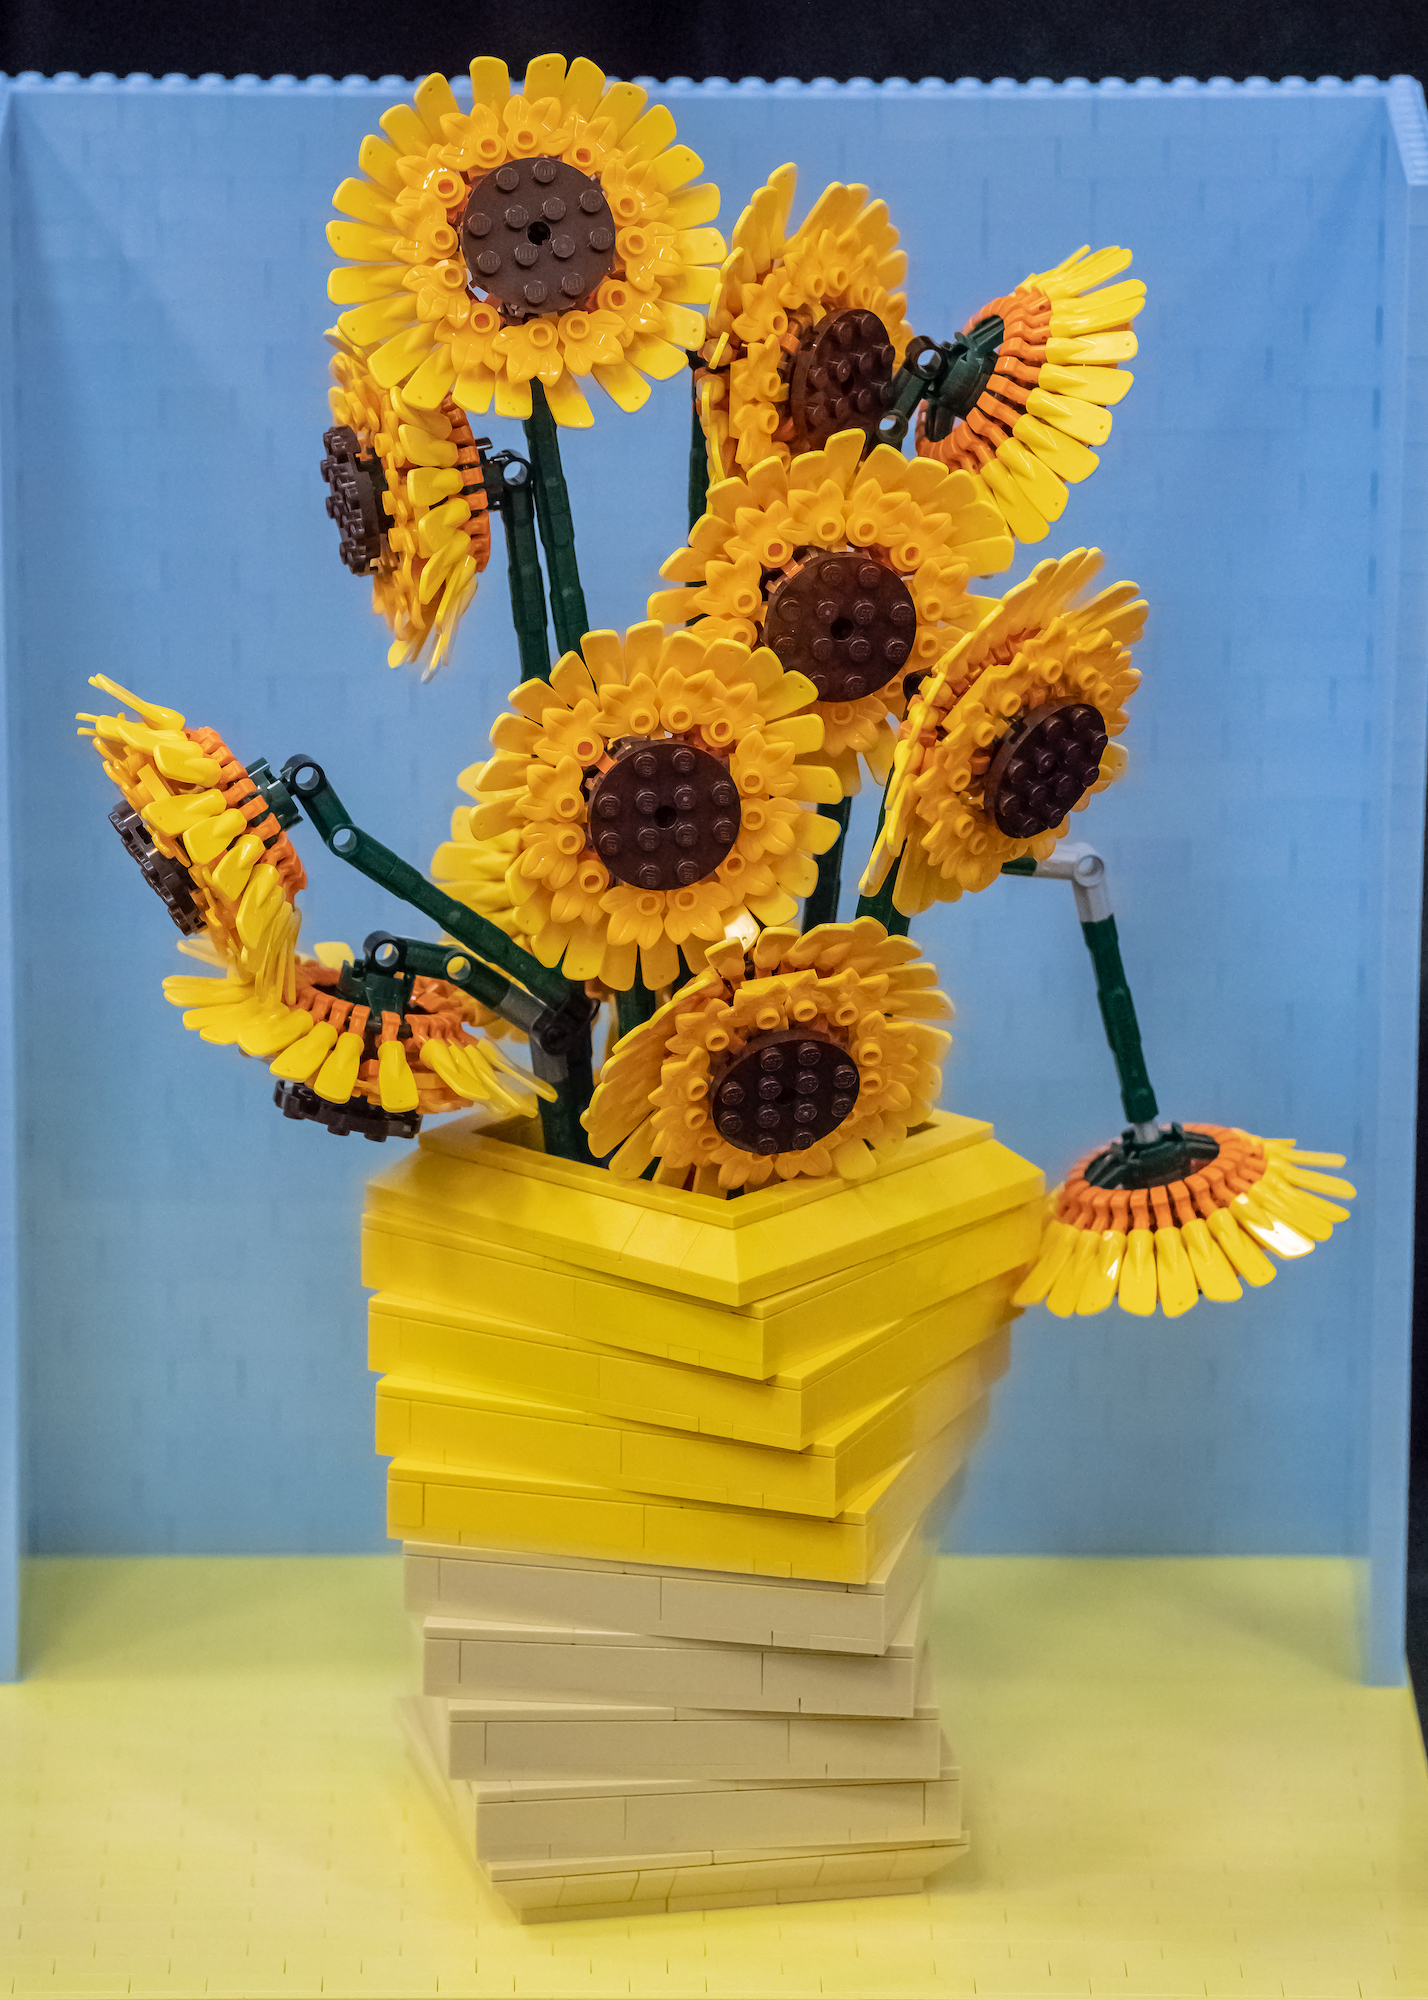 Image of LEGO built sunflowers